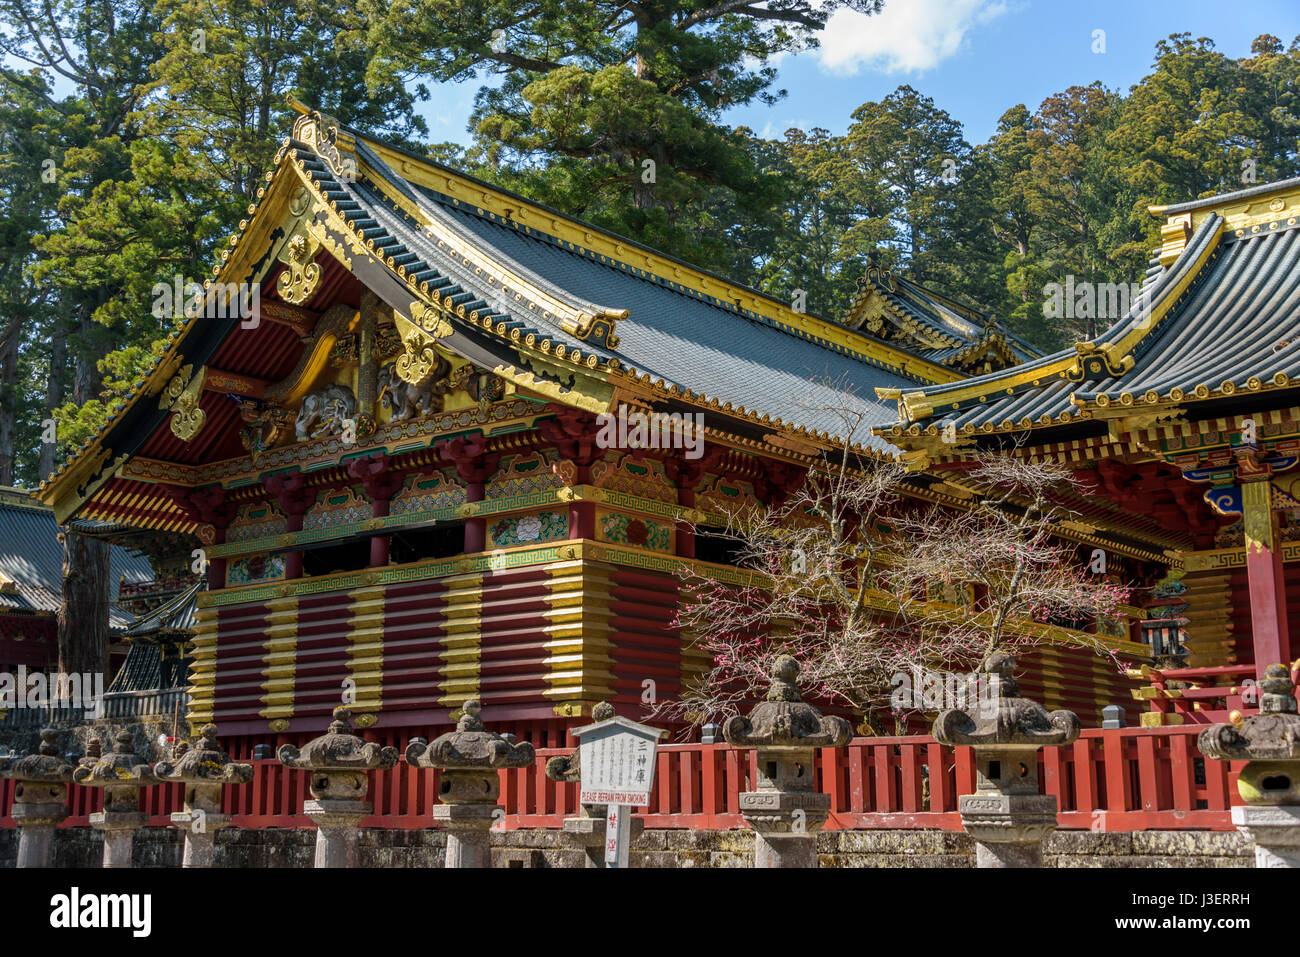 Ornate architecture and gilt decoration at Toshogu Shrine, Nikko. Stock Photo